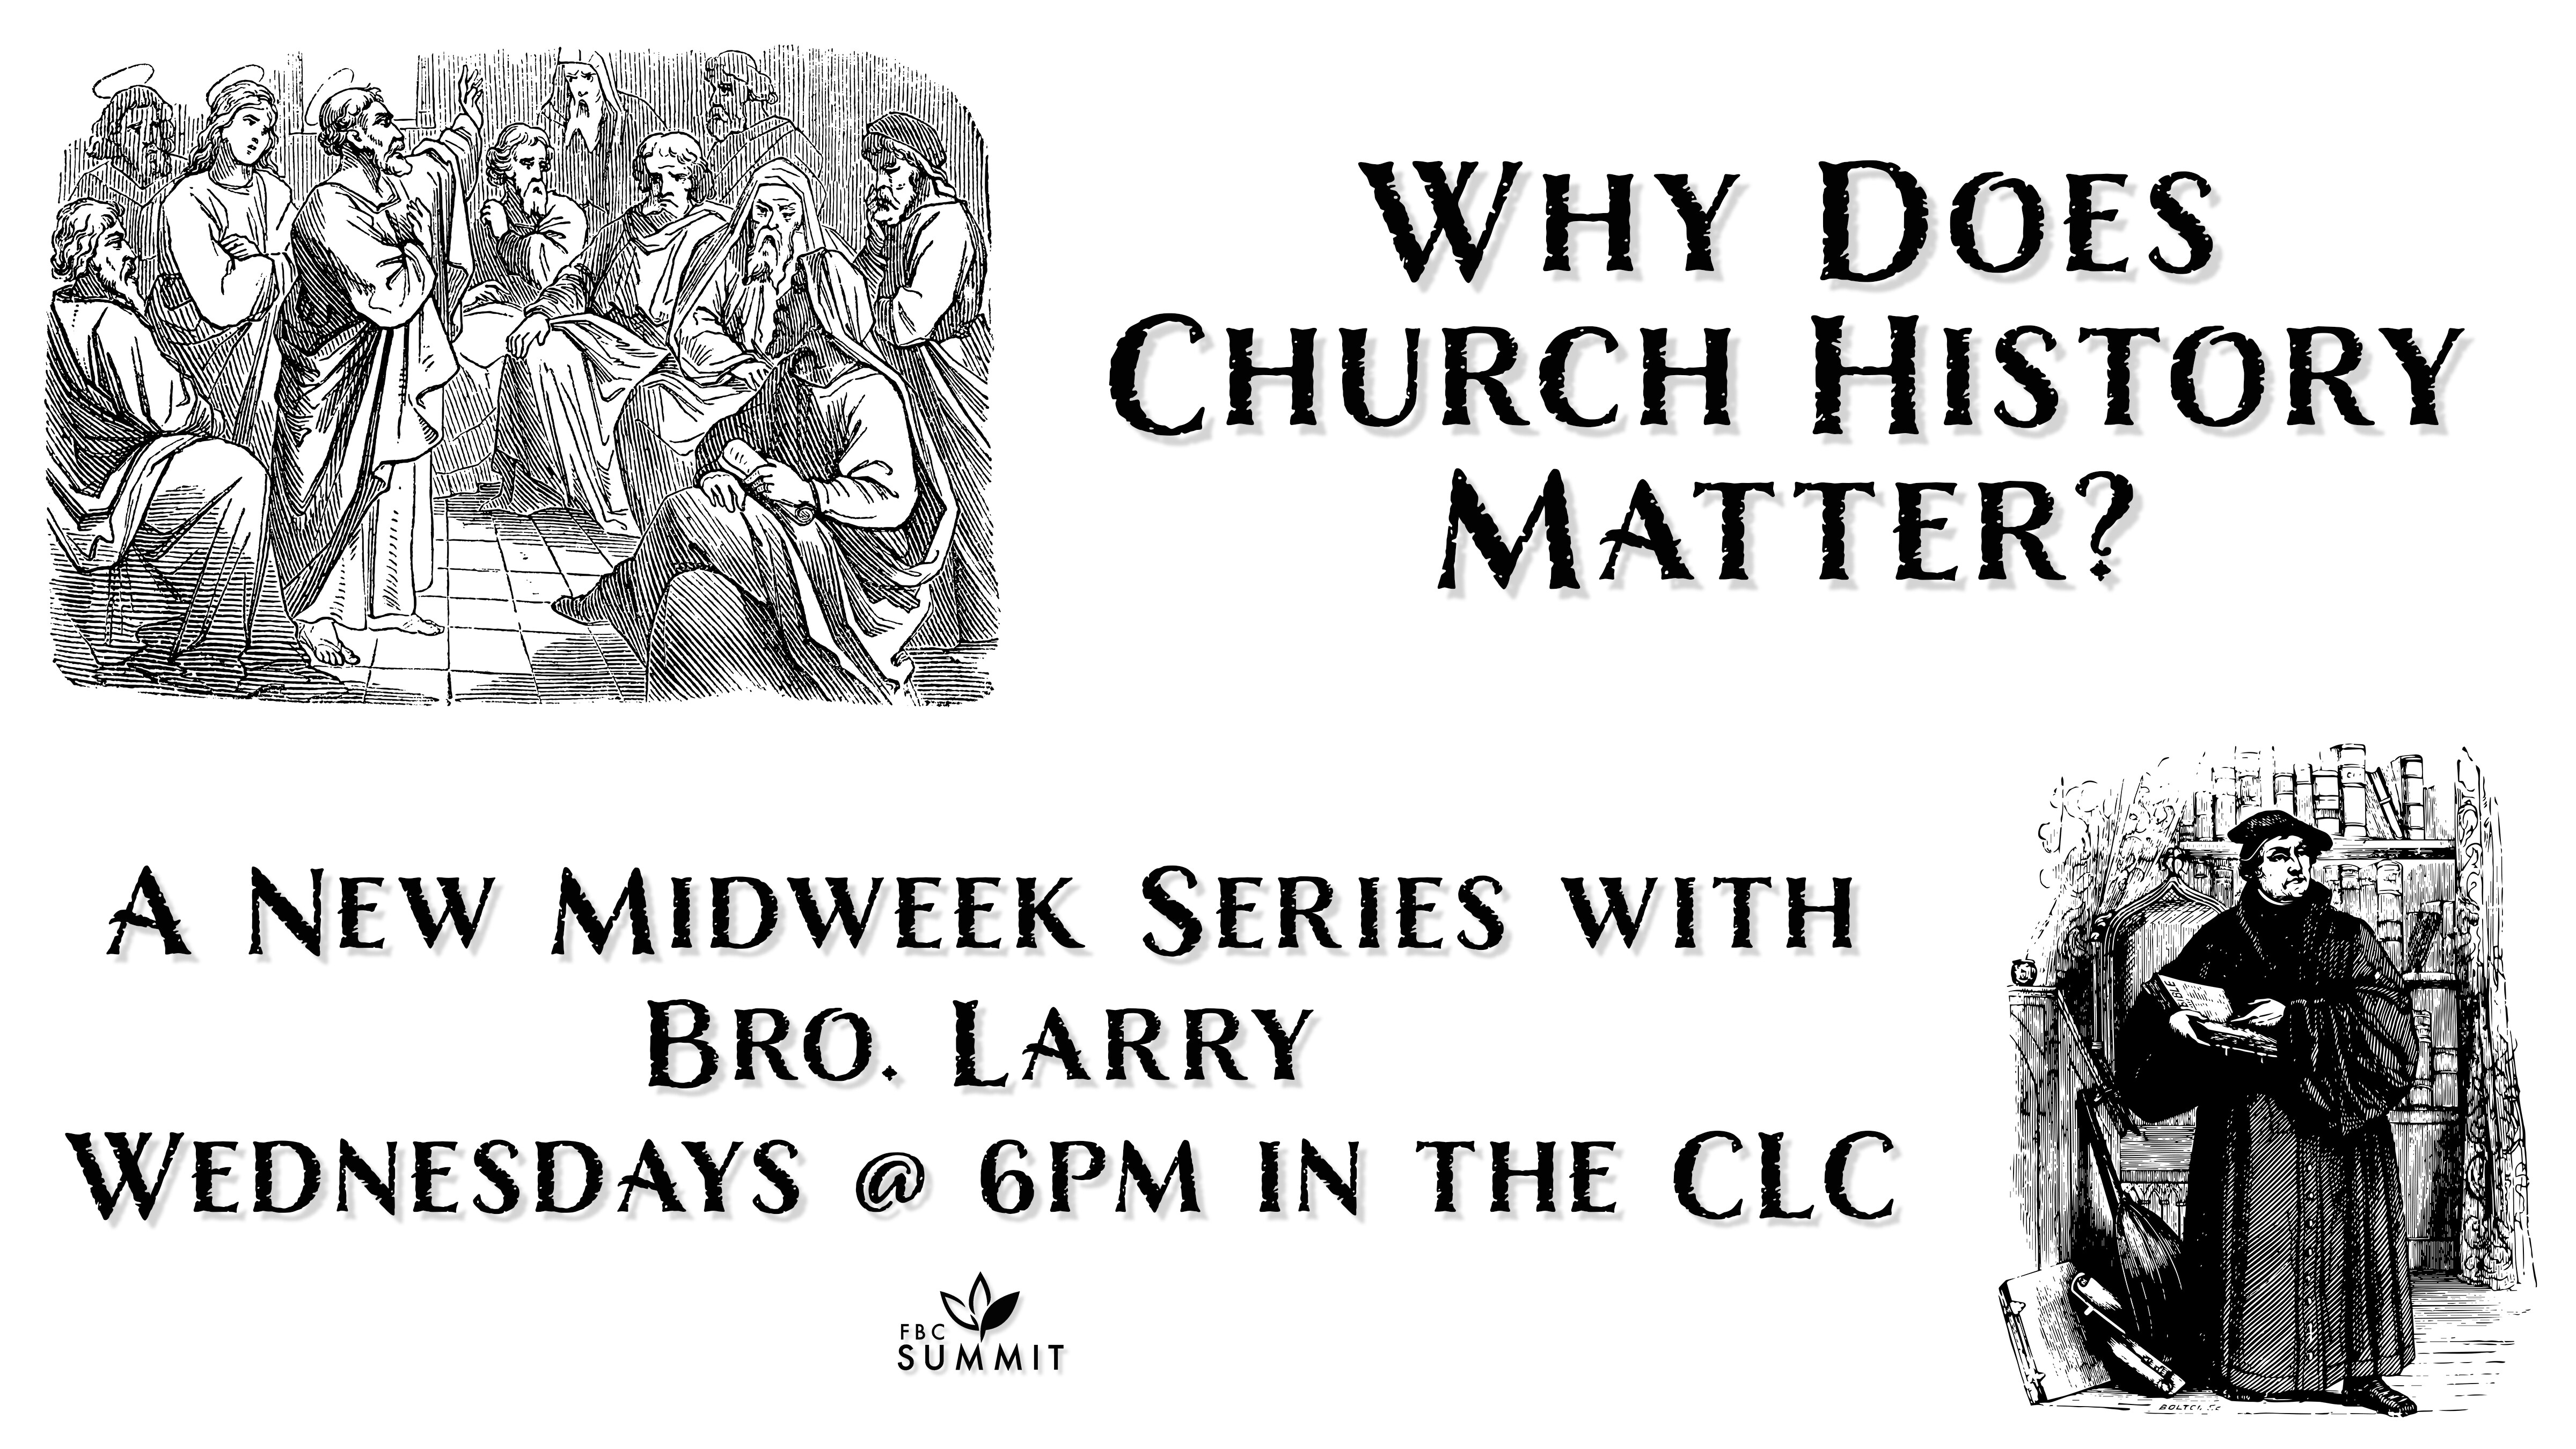 Midweek Bible Study: "Church History 101: The 17th & 18th Centuries" // Dr. Larry LeBlanc